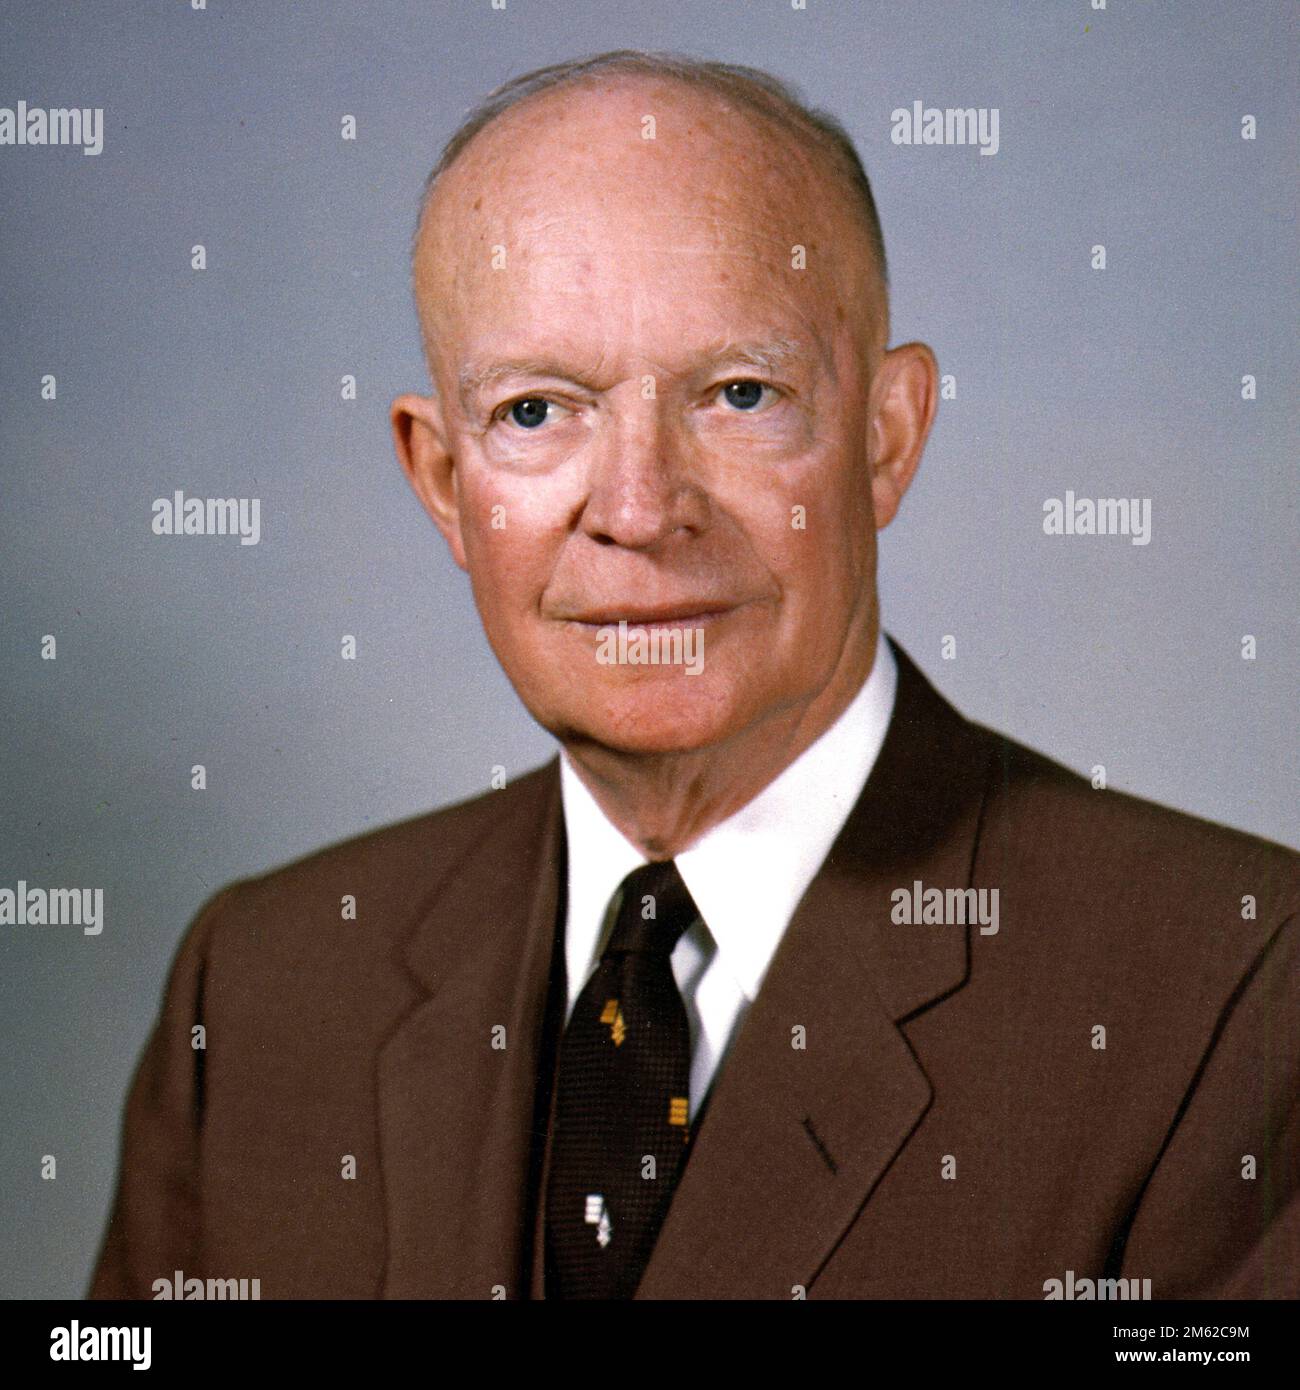 Dwight D. Eisenhower, White House photo portrait, February 1959 Stock Photo